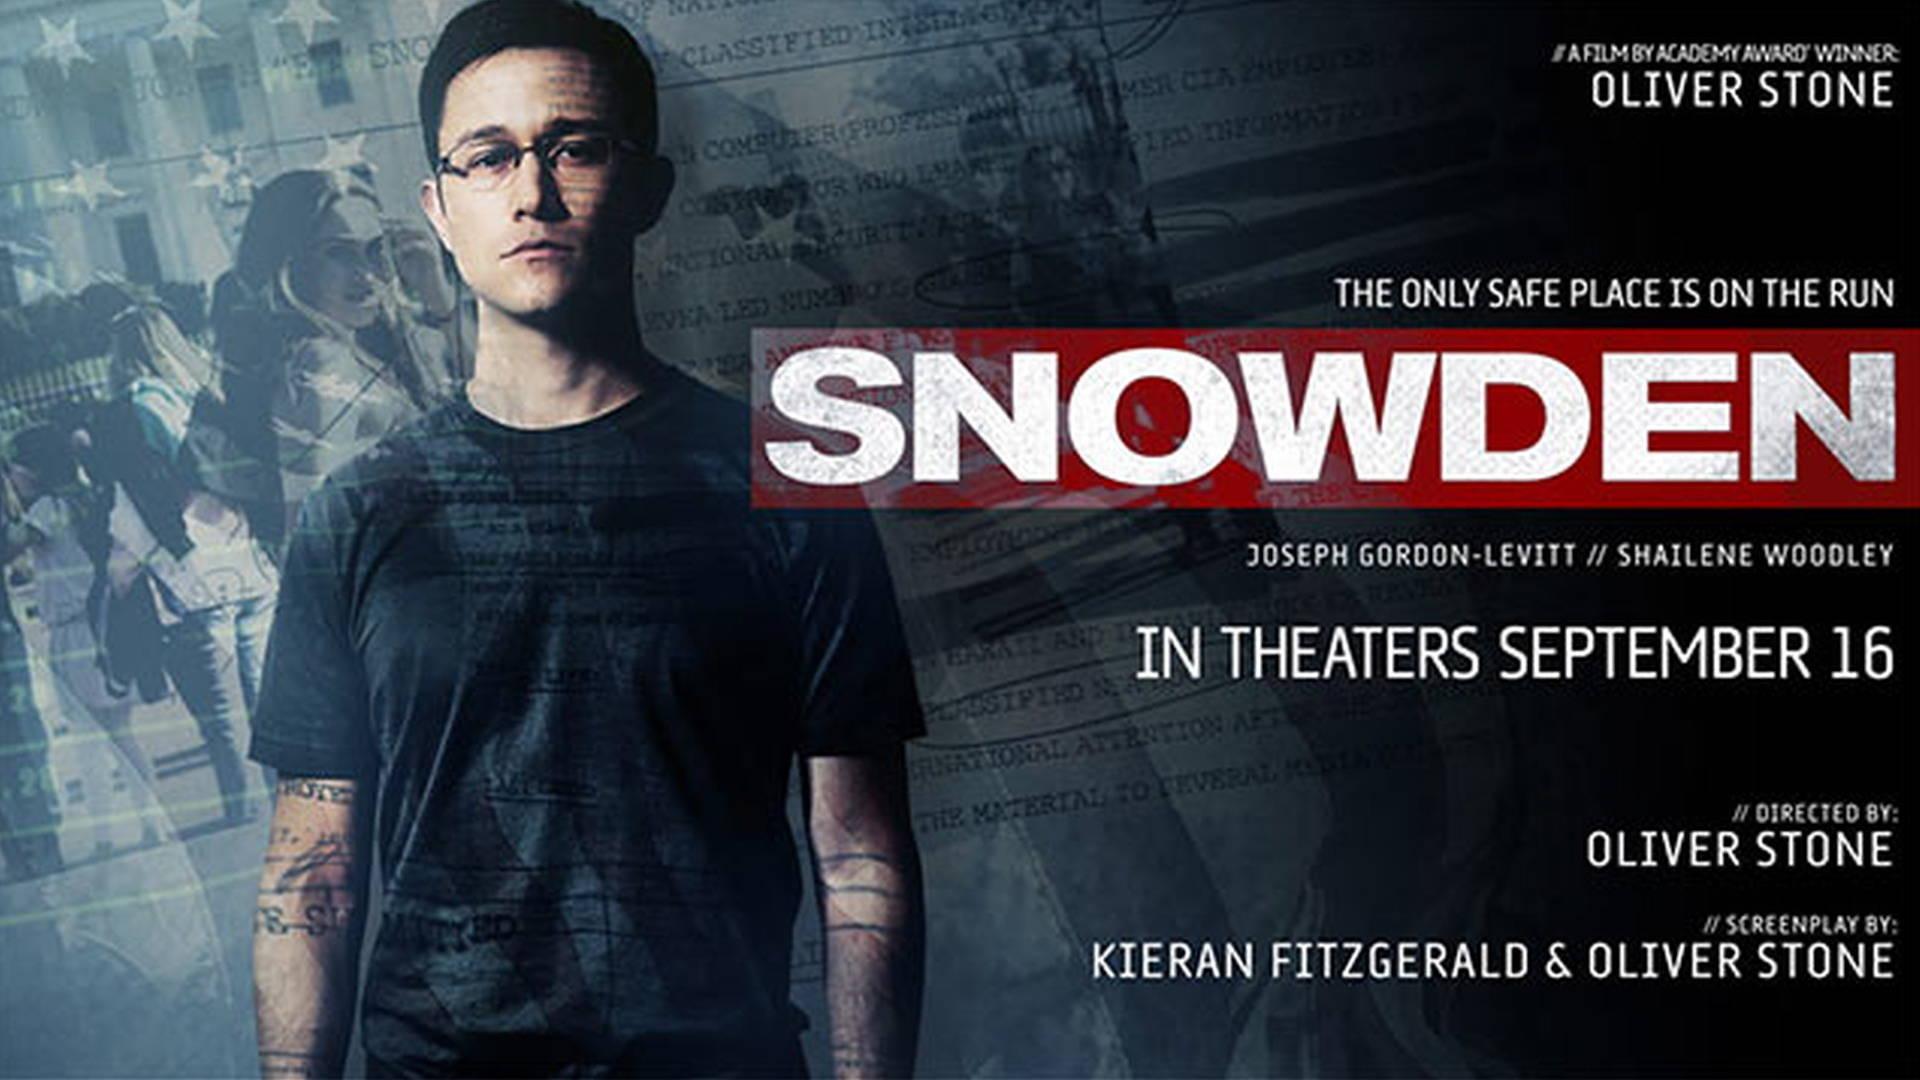 Oliver Stone & Joseph Gordon Levitt On Making New Film “Snowden